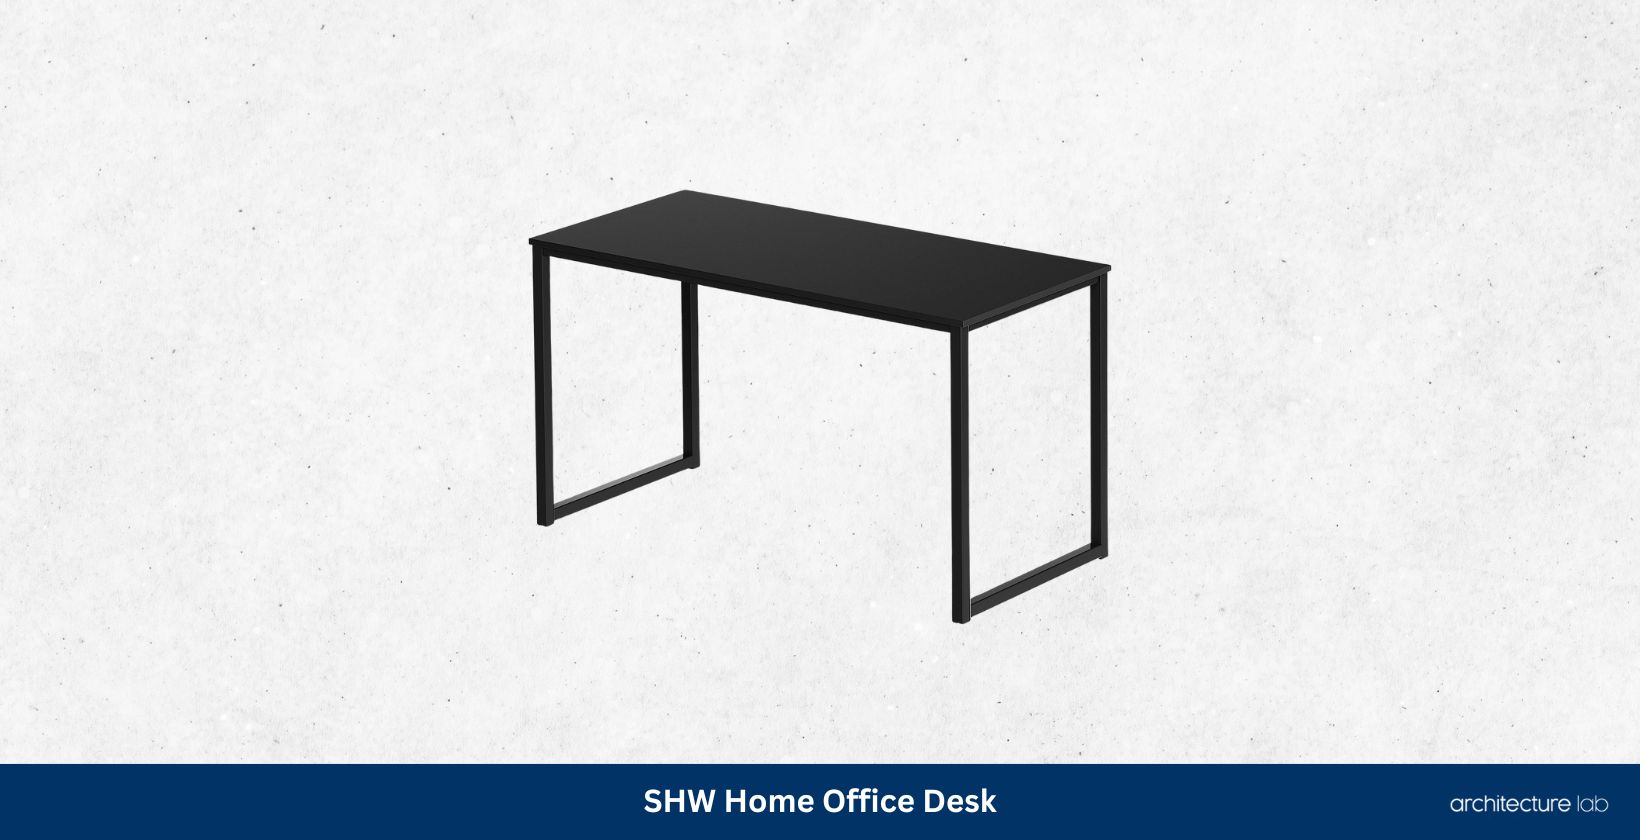 Shw home office desk